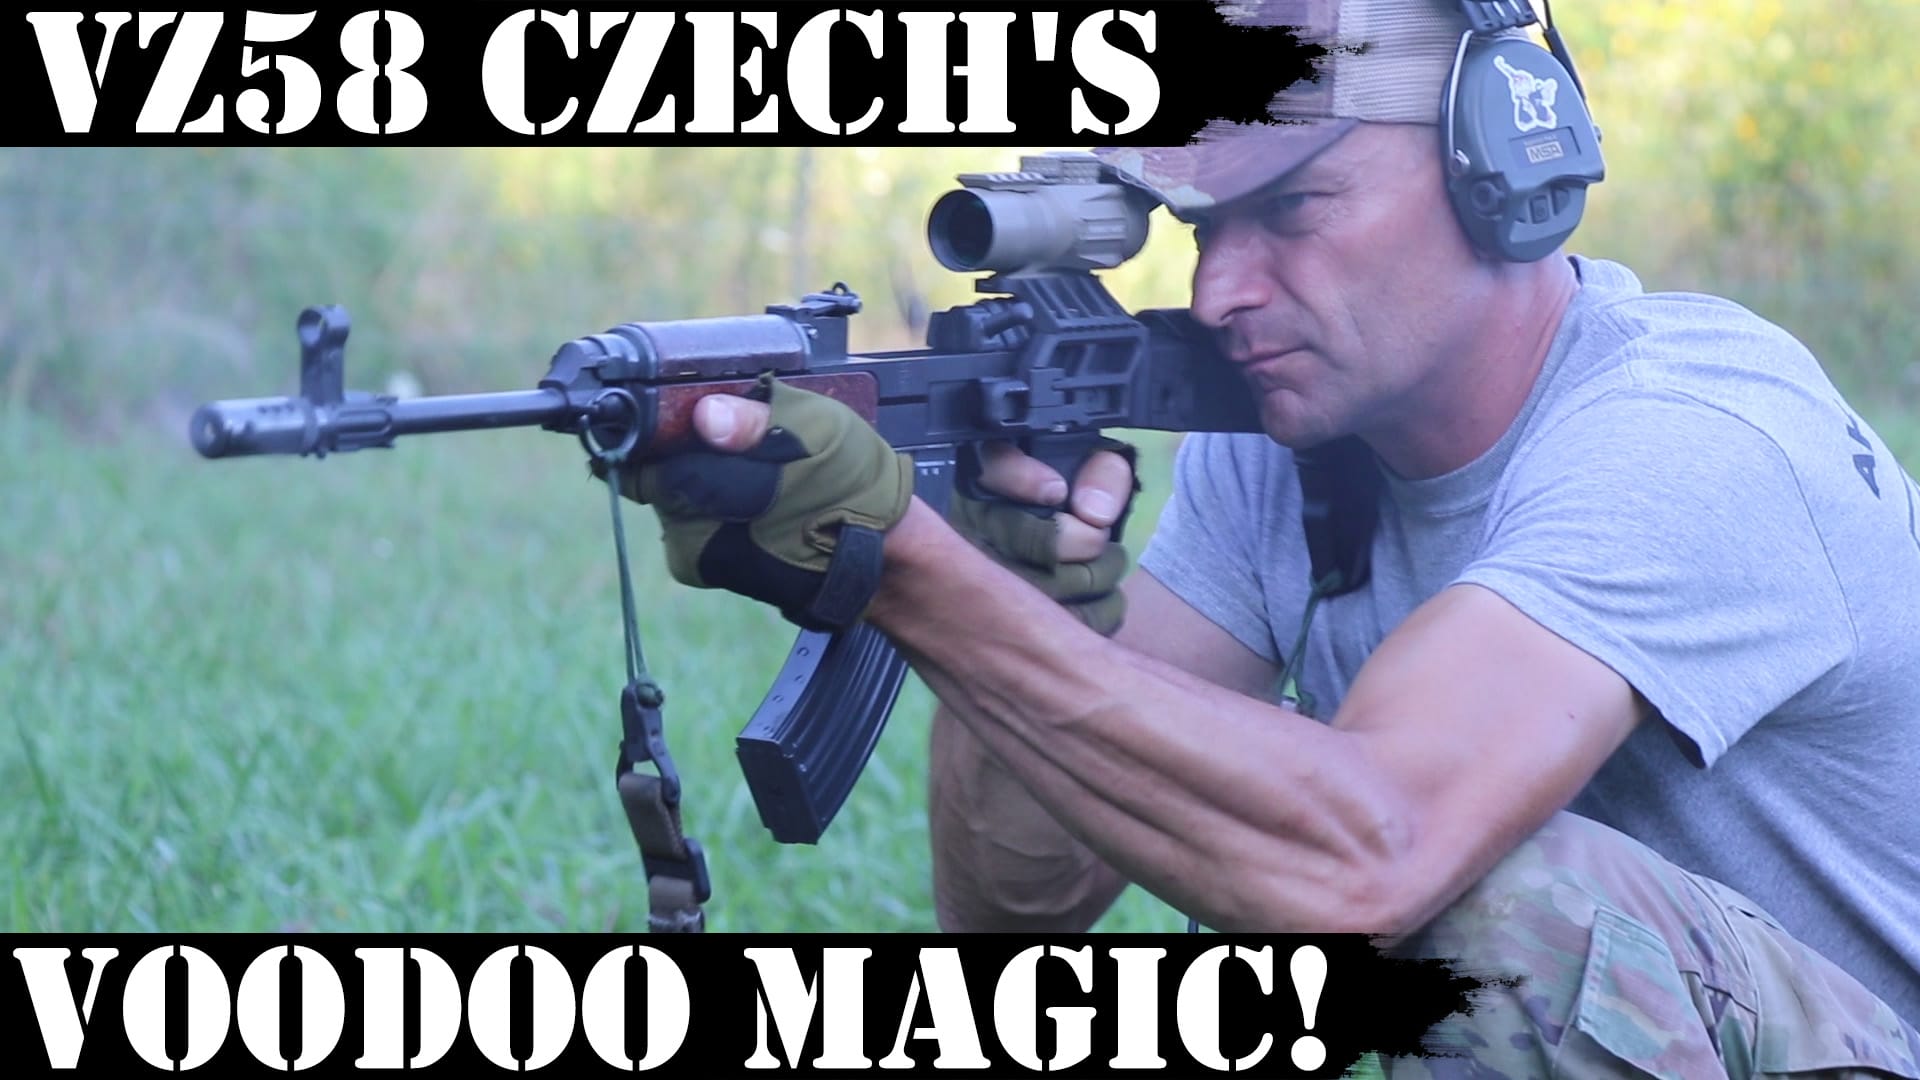 VZ58 Czech’s Voodoo Magic!